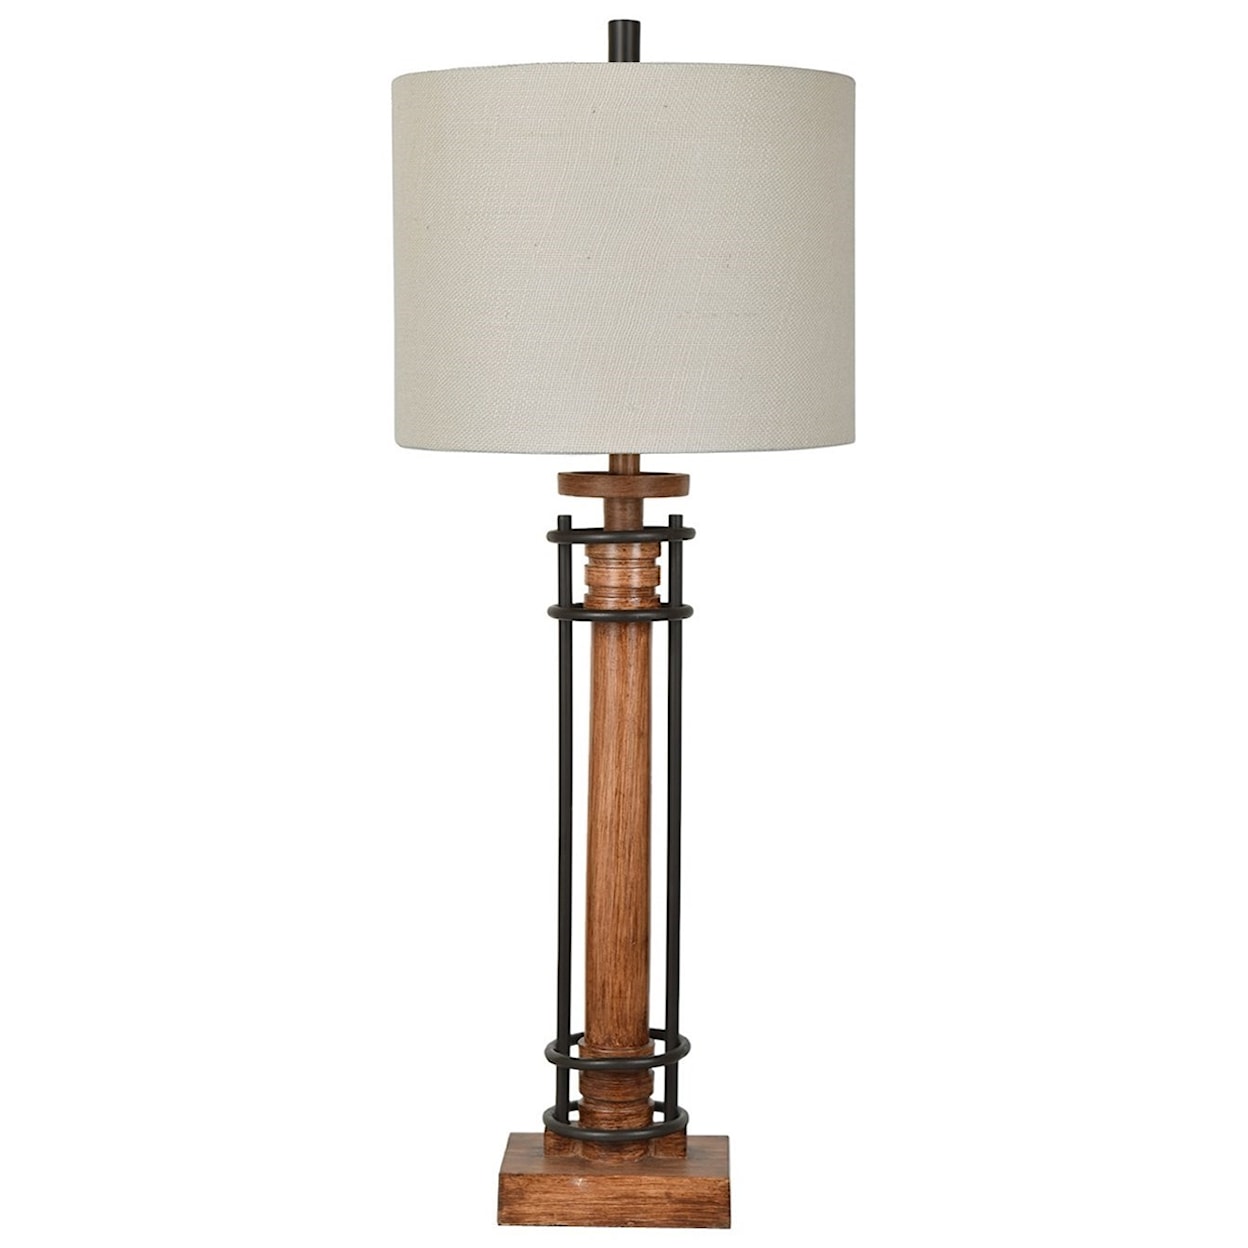 Crestview Collection Lighting Garson Table Lamp